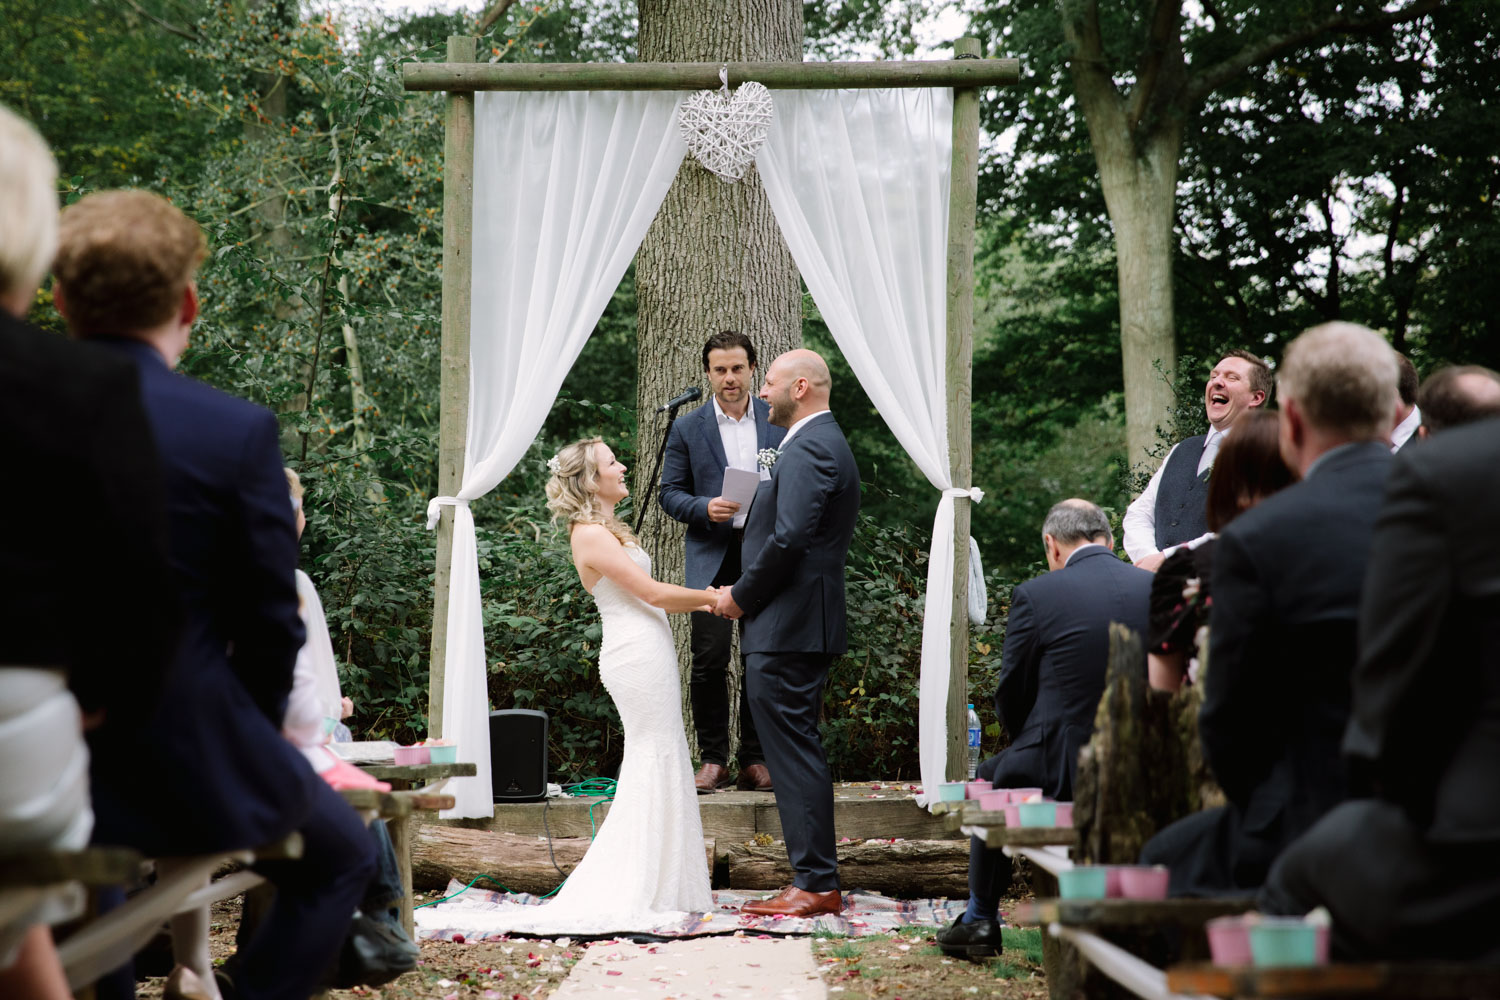 Oxford Wedding Photographer - Wedding ceremony ideas